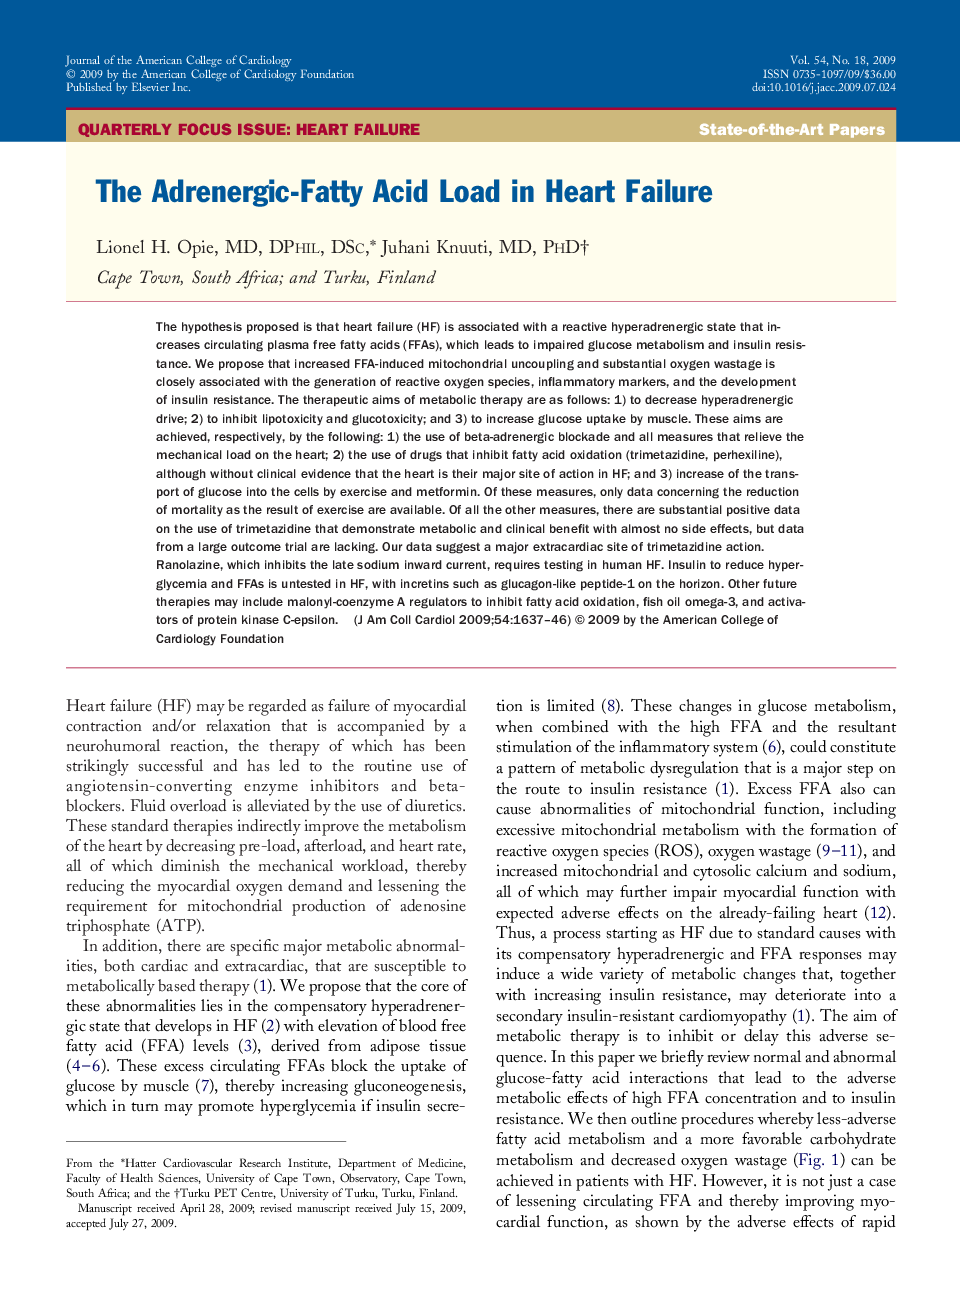 The Adrenergic-Fatty Acid Load in Heart Failure